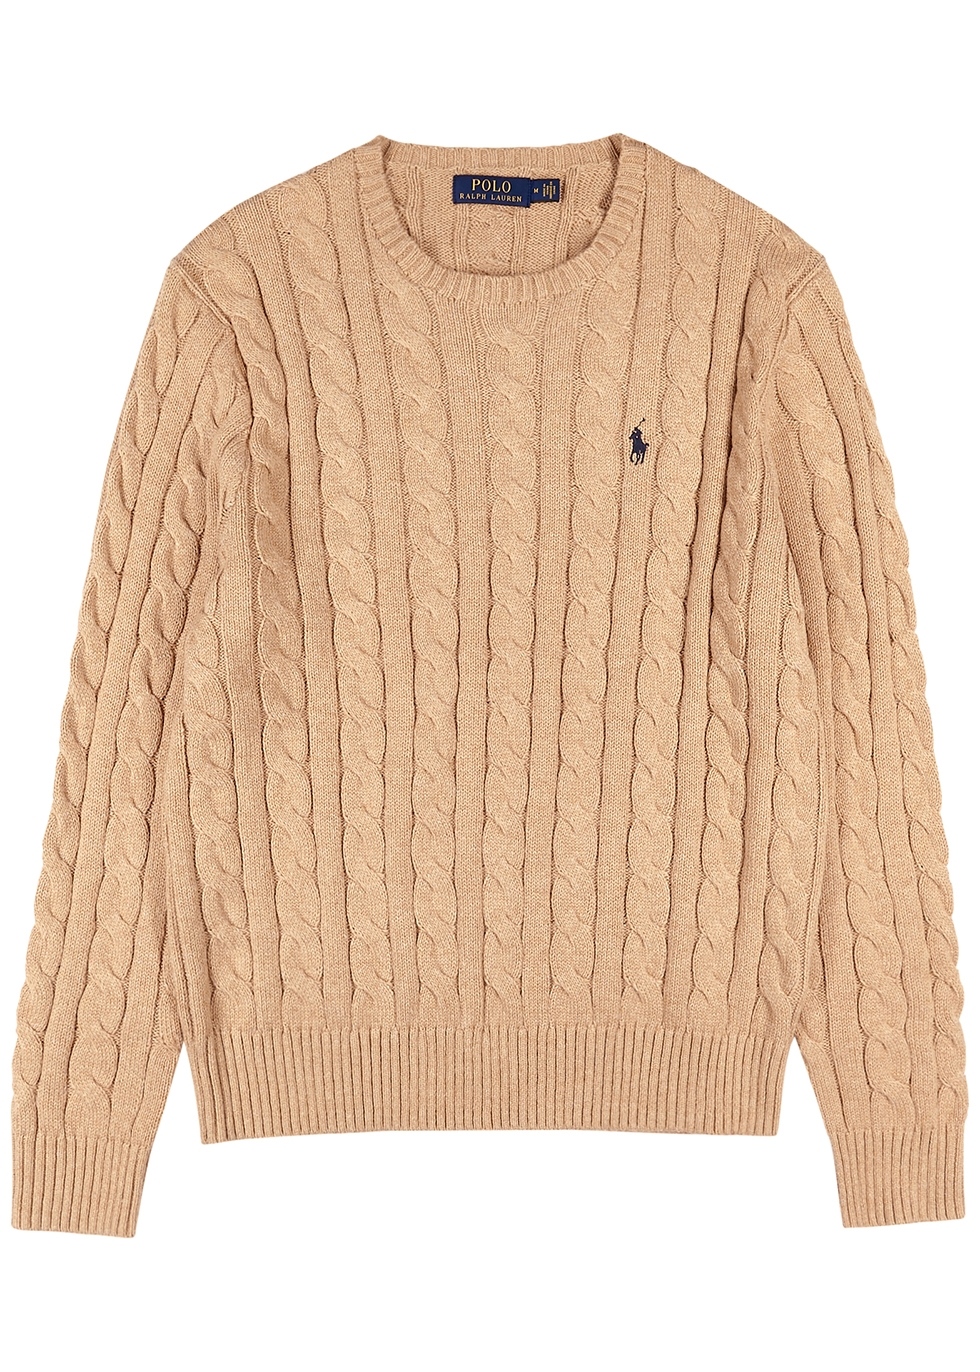 ralph lauren cable knit sweater